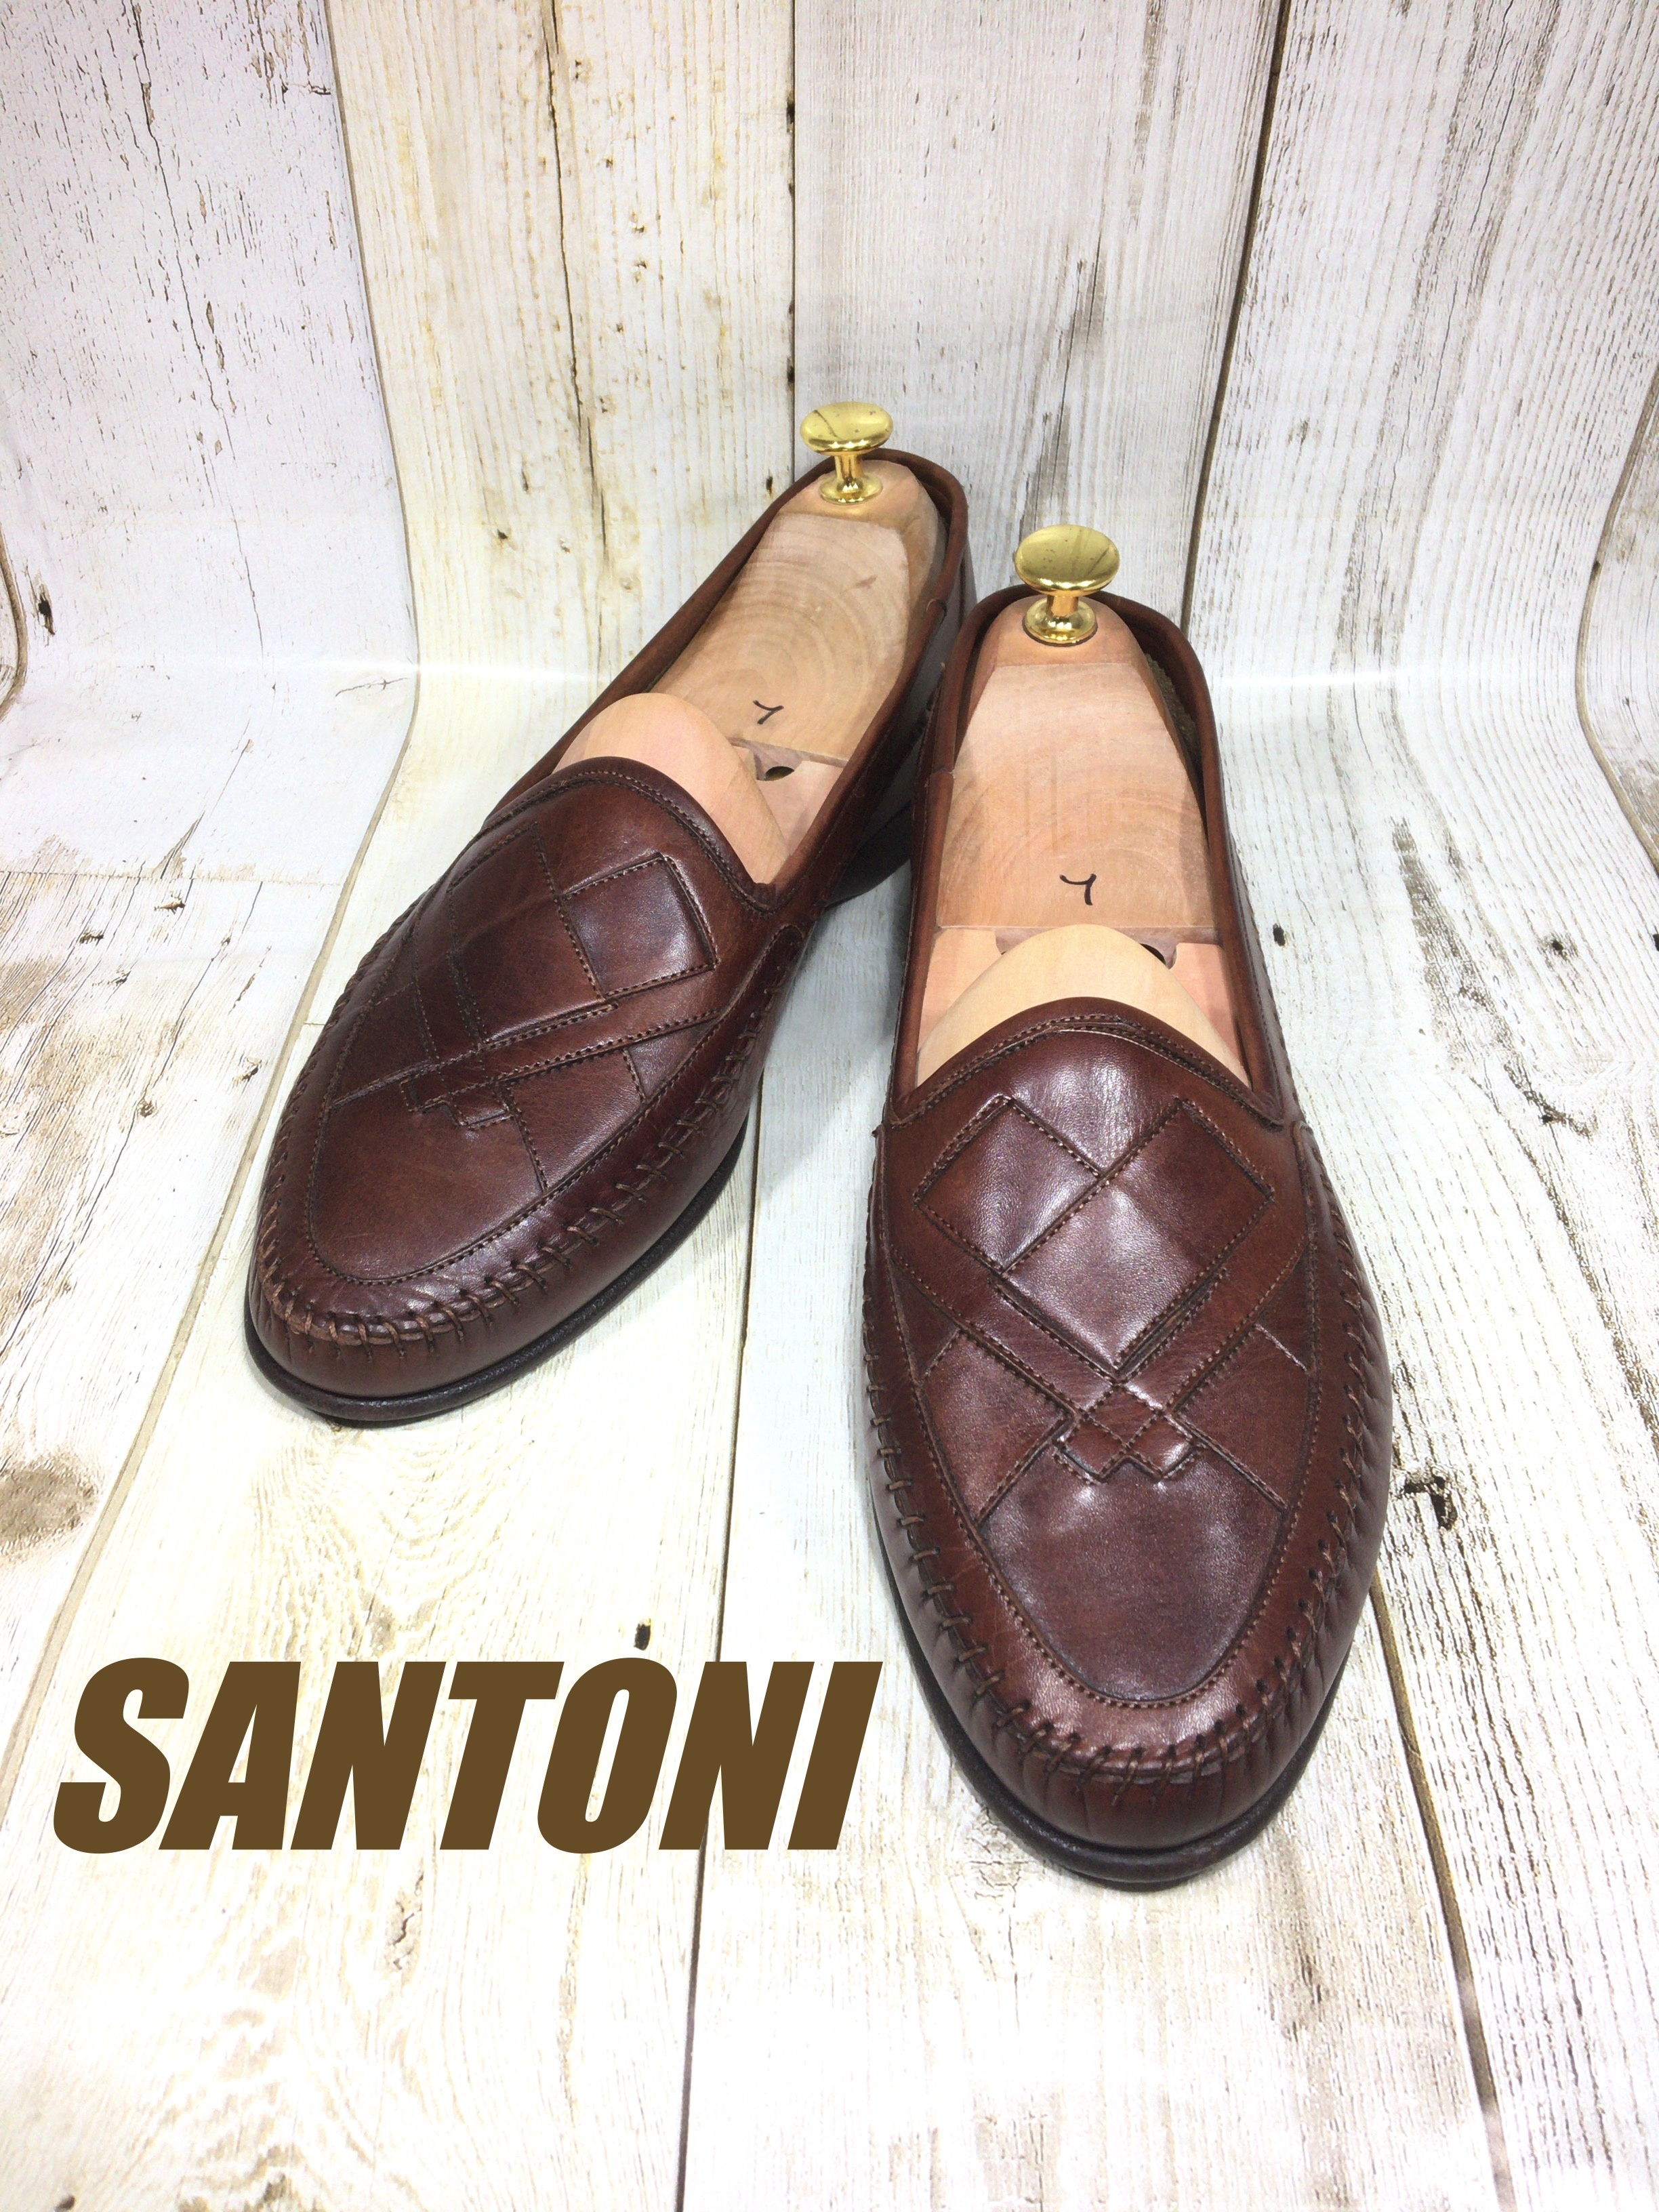 Santoni サントーニ ローファー US9 27cm | 中古靴・革靴・ブーツ通販専門店 DafsMart ダフスマート Online Shop